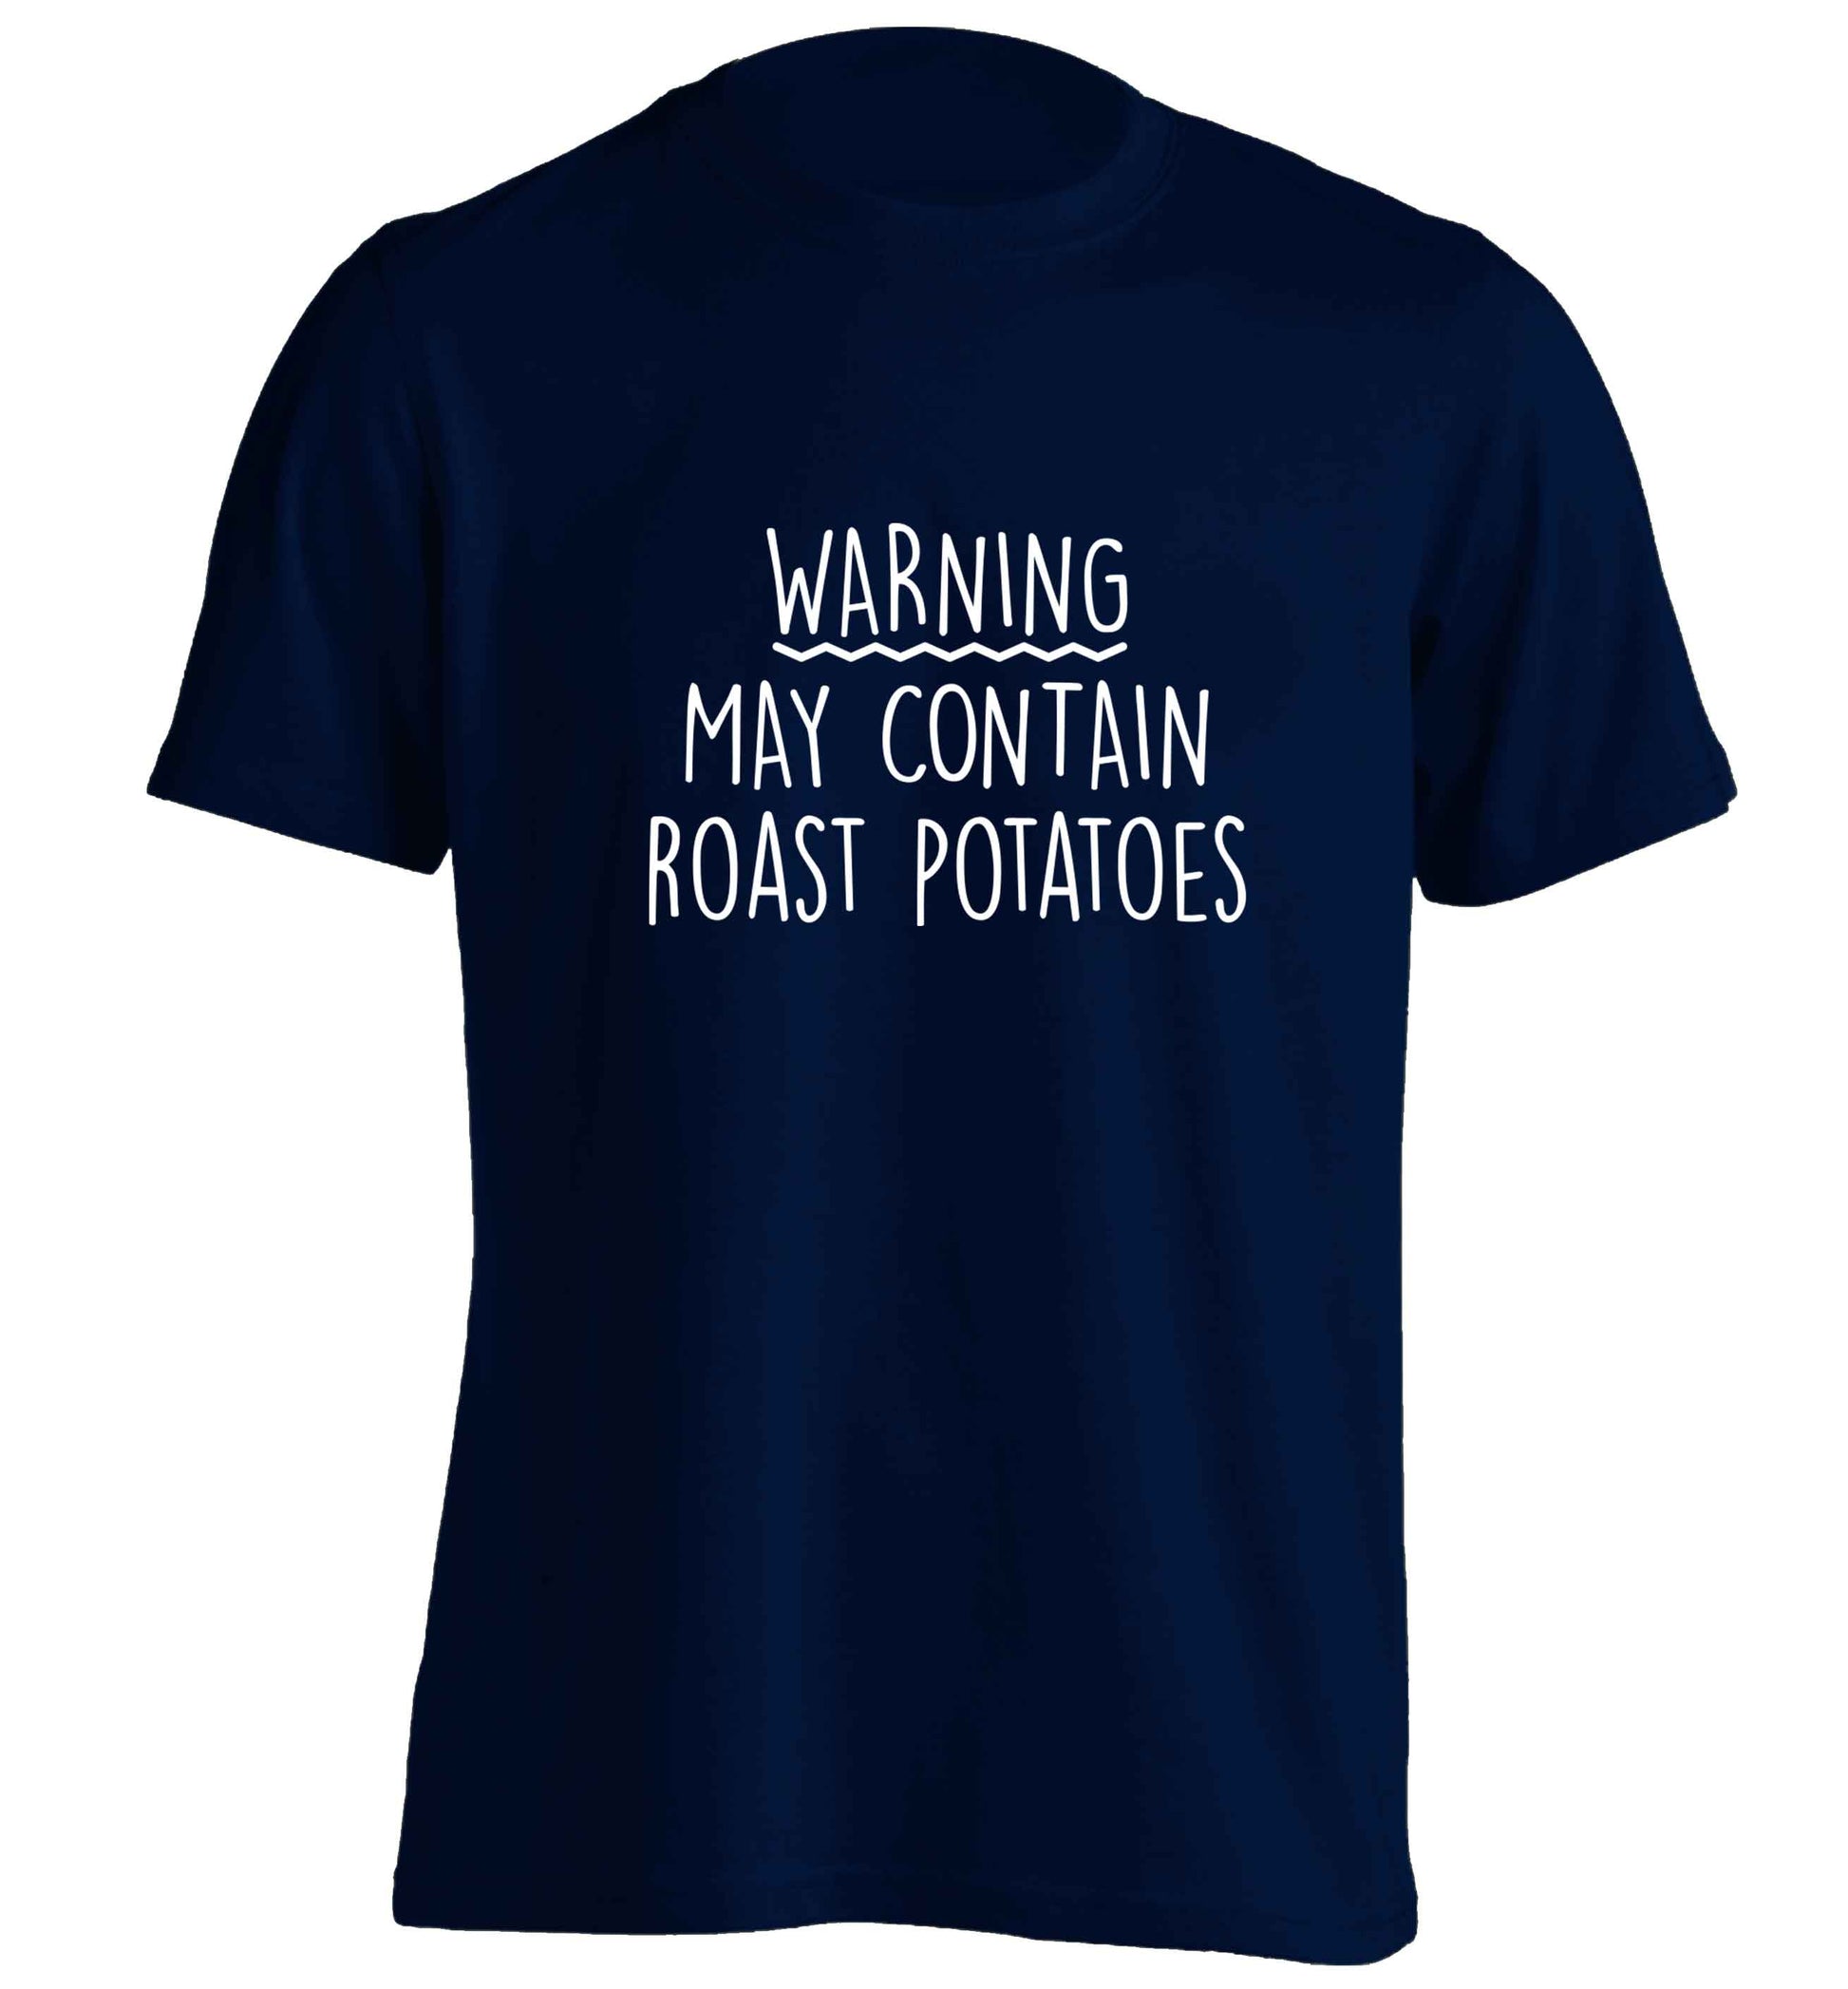 Warning may containg roast potatoes adults unisex navy Tshirt 2XL